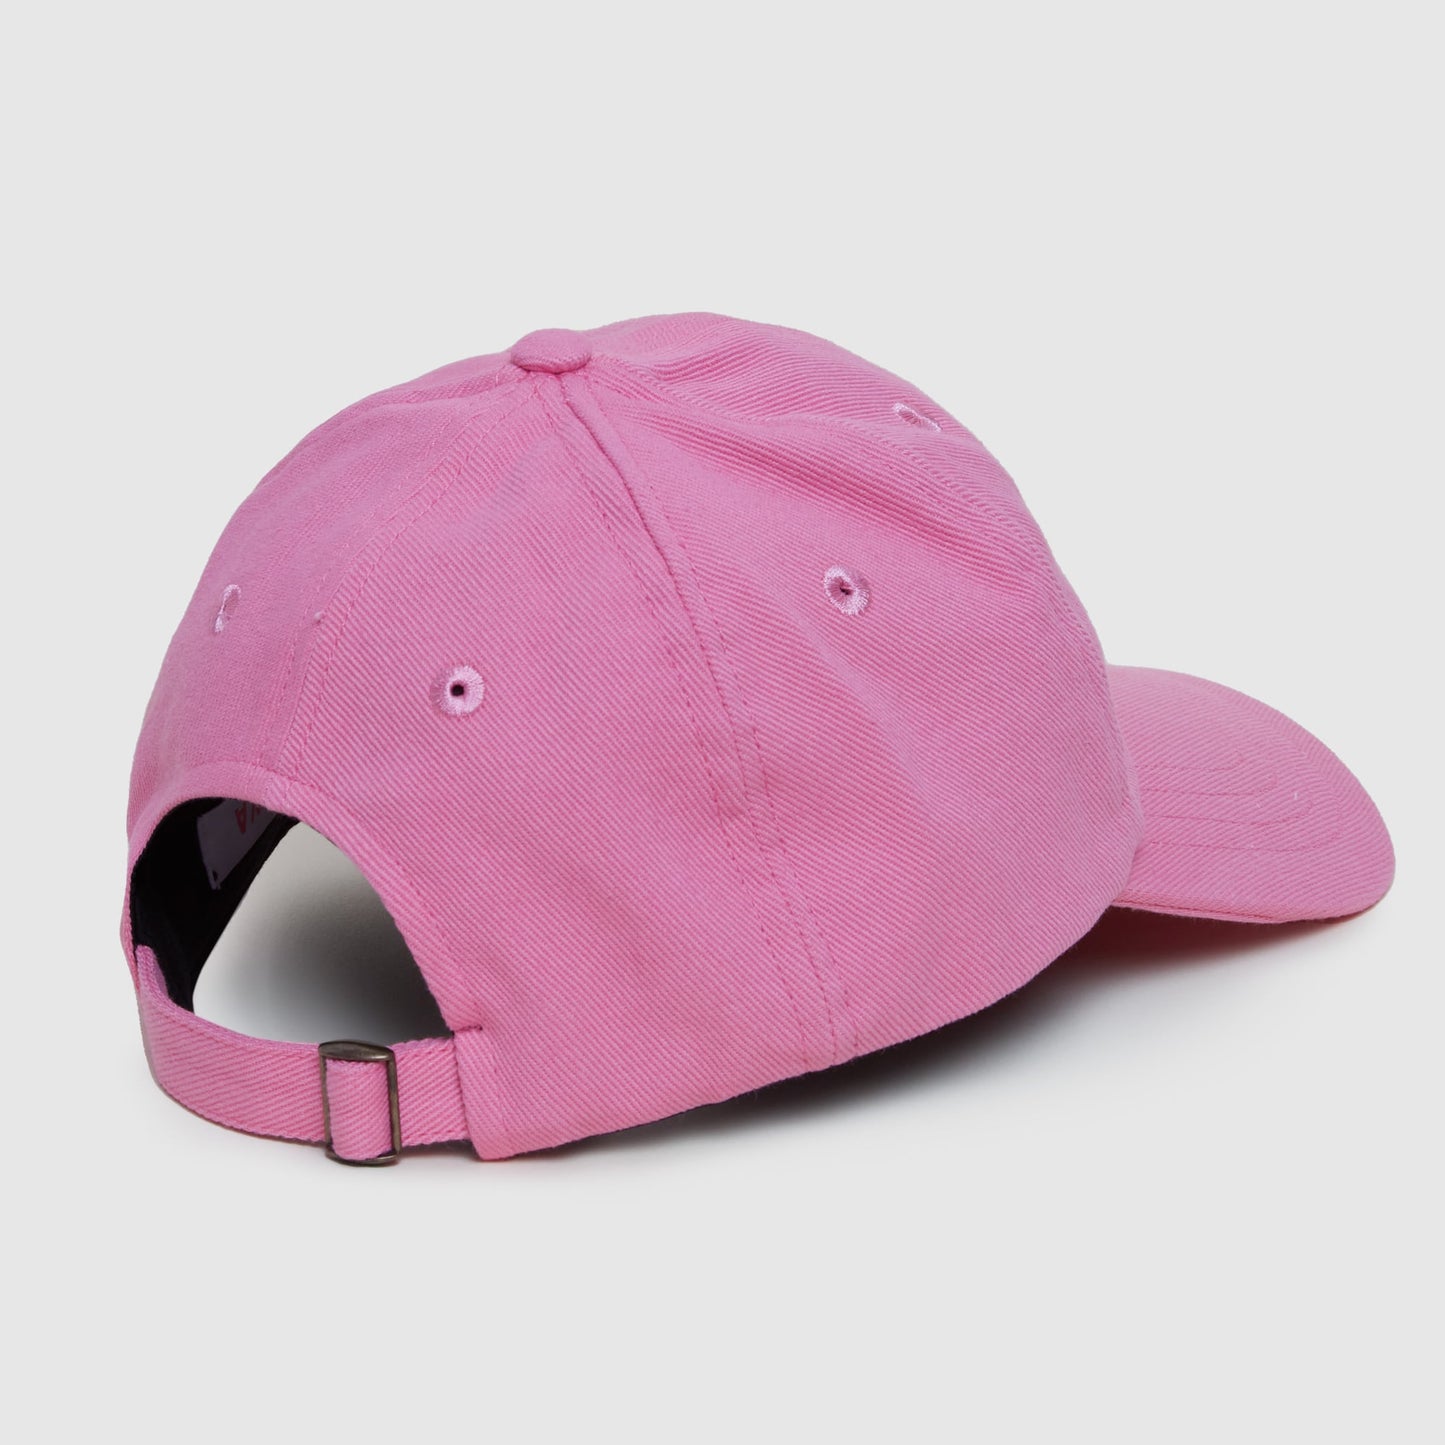 La casquette rose